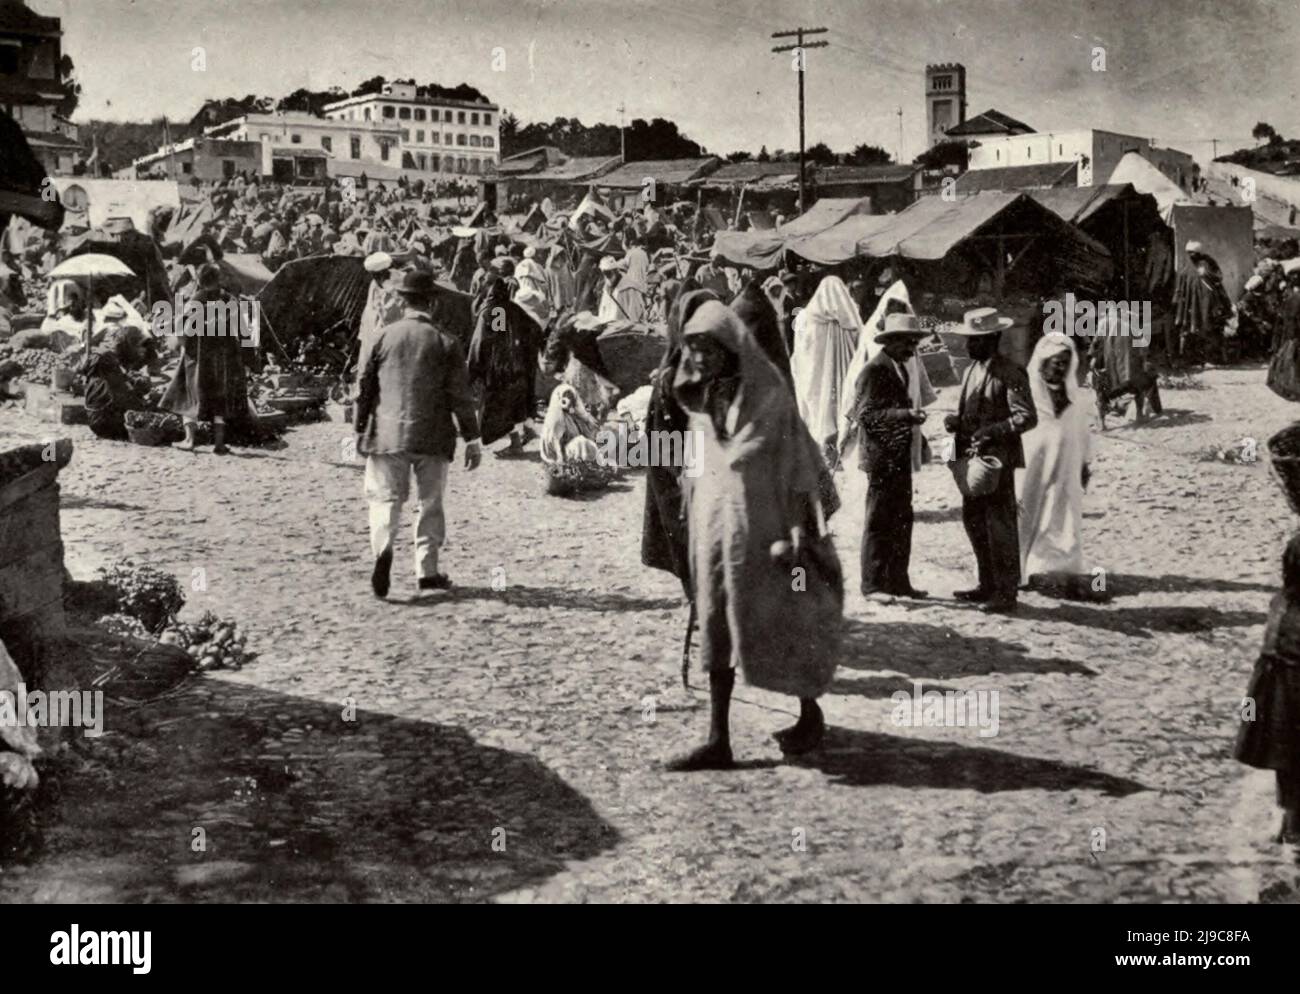 El mercado de Tánger, Marruecos, alrededor de 1910 Foto de stock